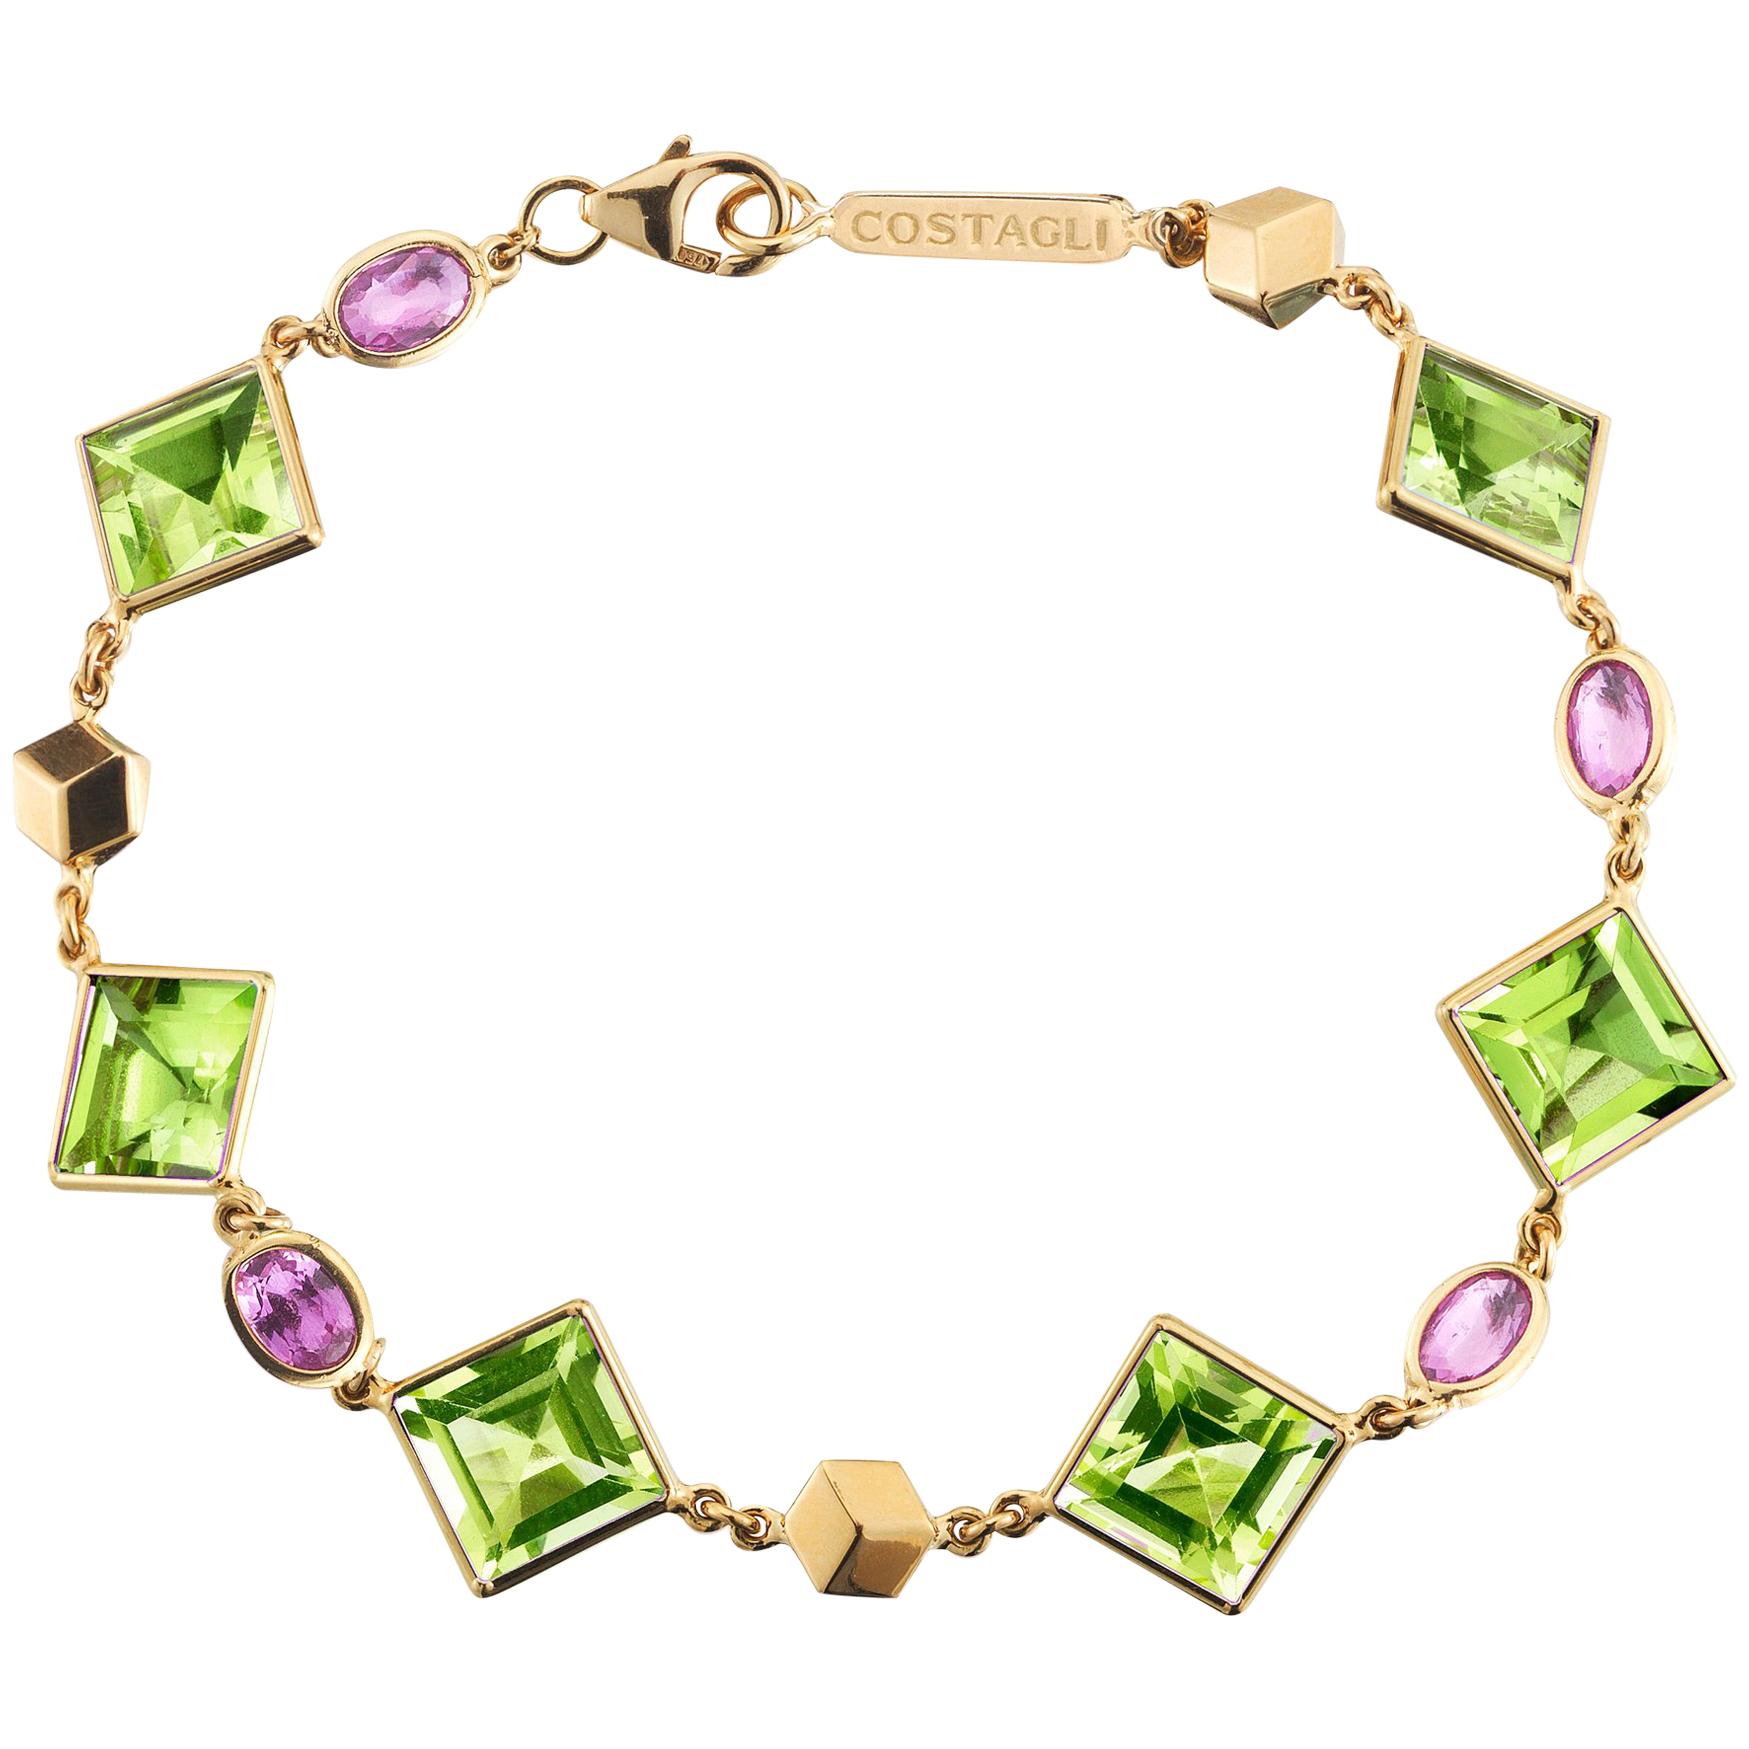 18 Karat Yellow Gold Florentine Bracelet with Peridot and Pink Sapphires